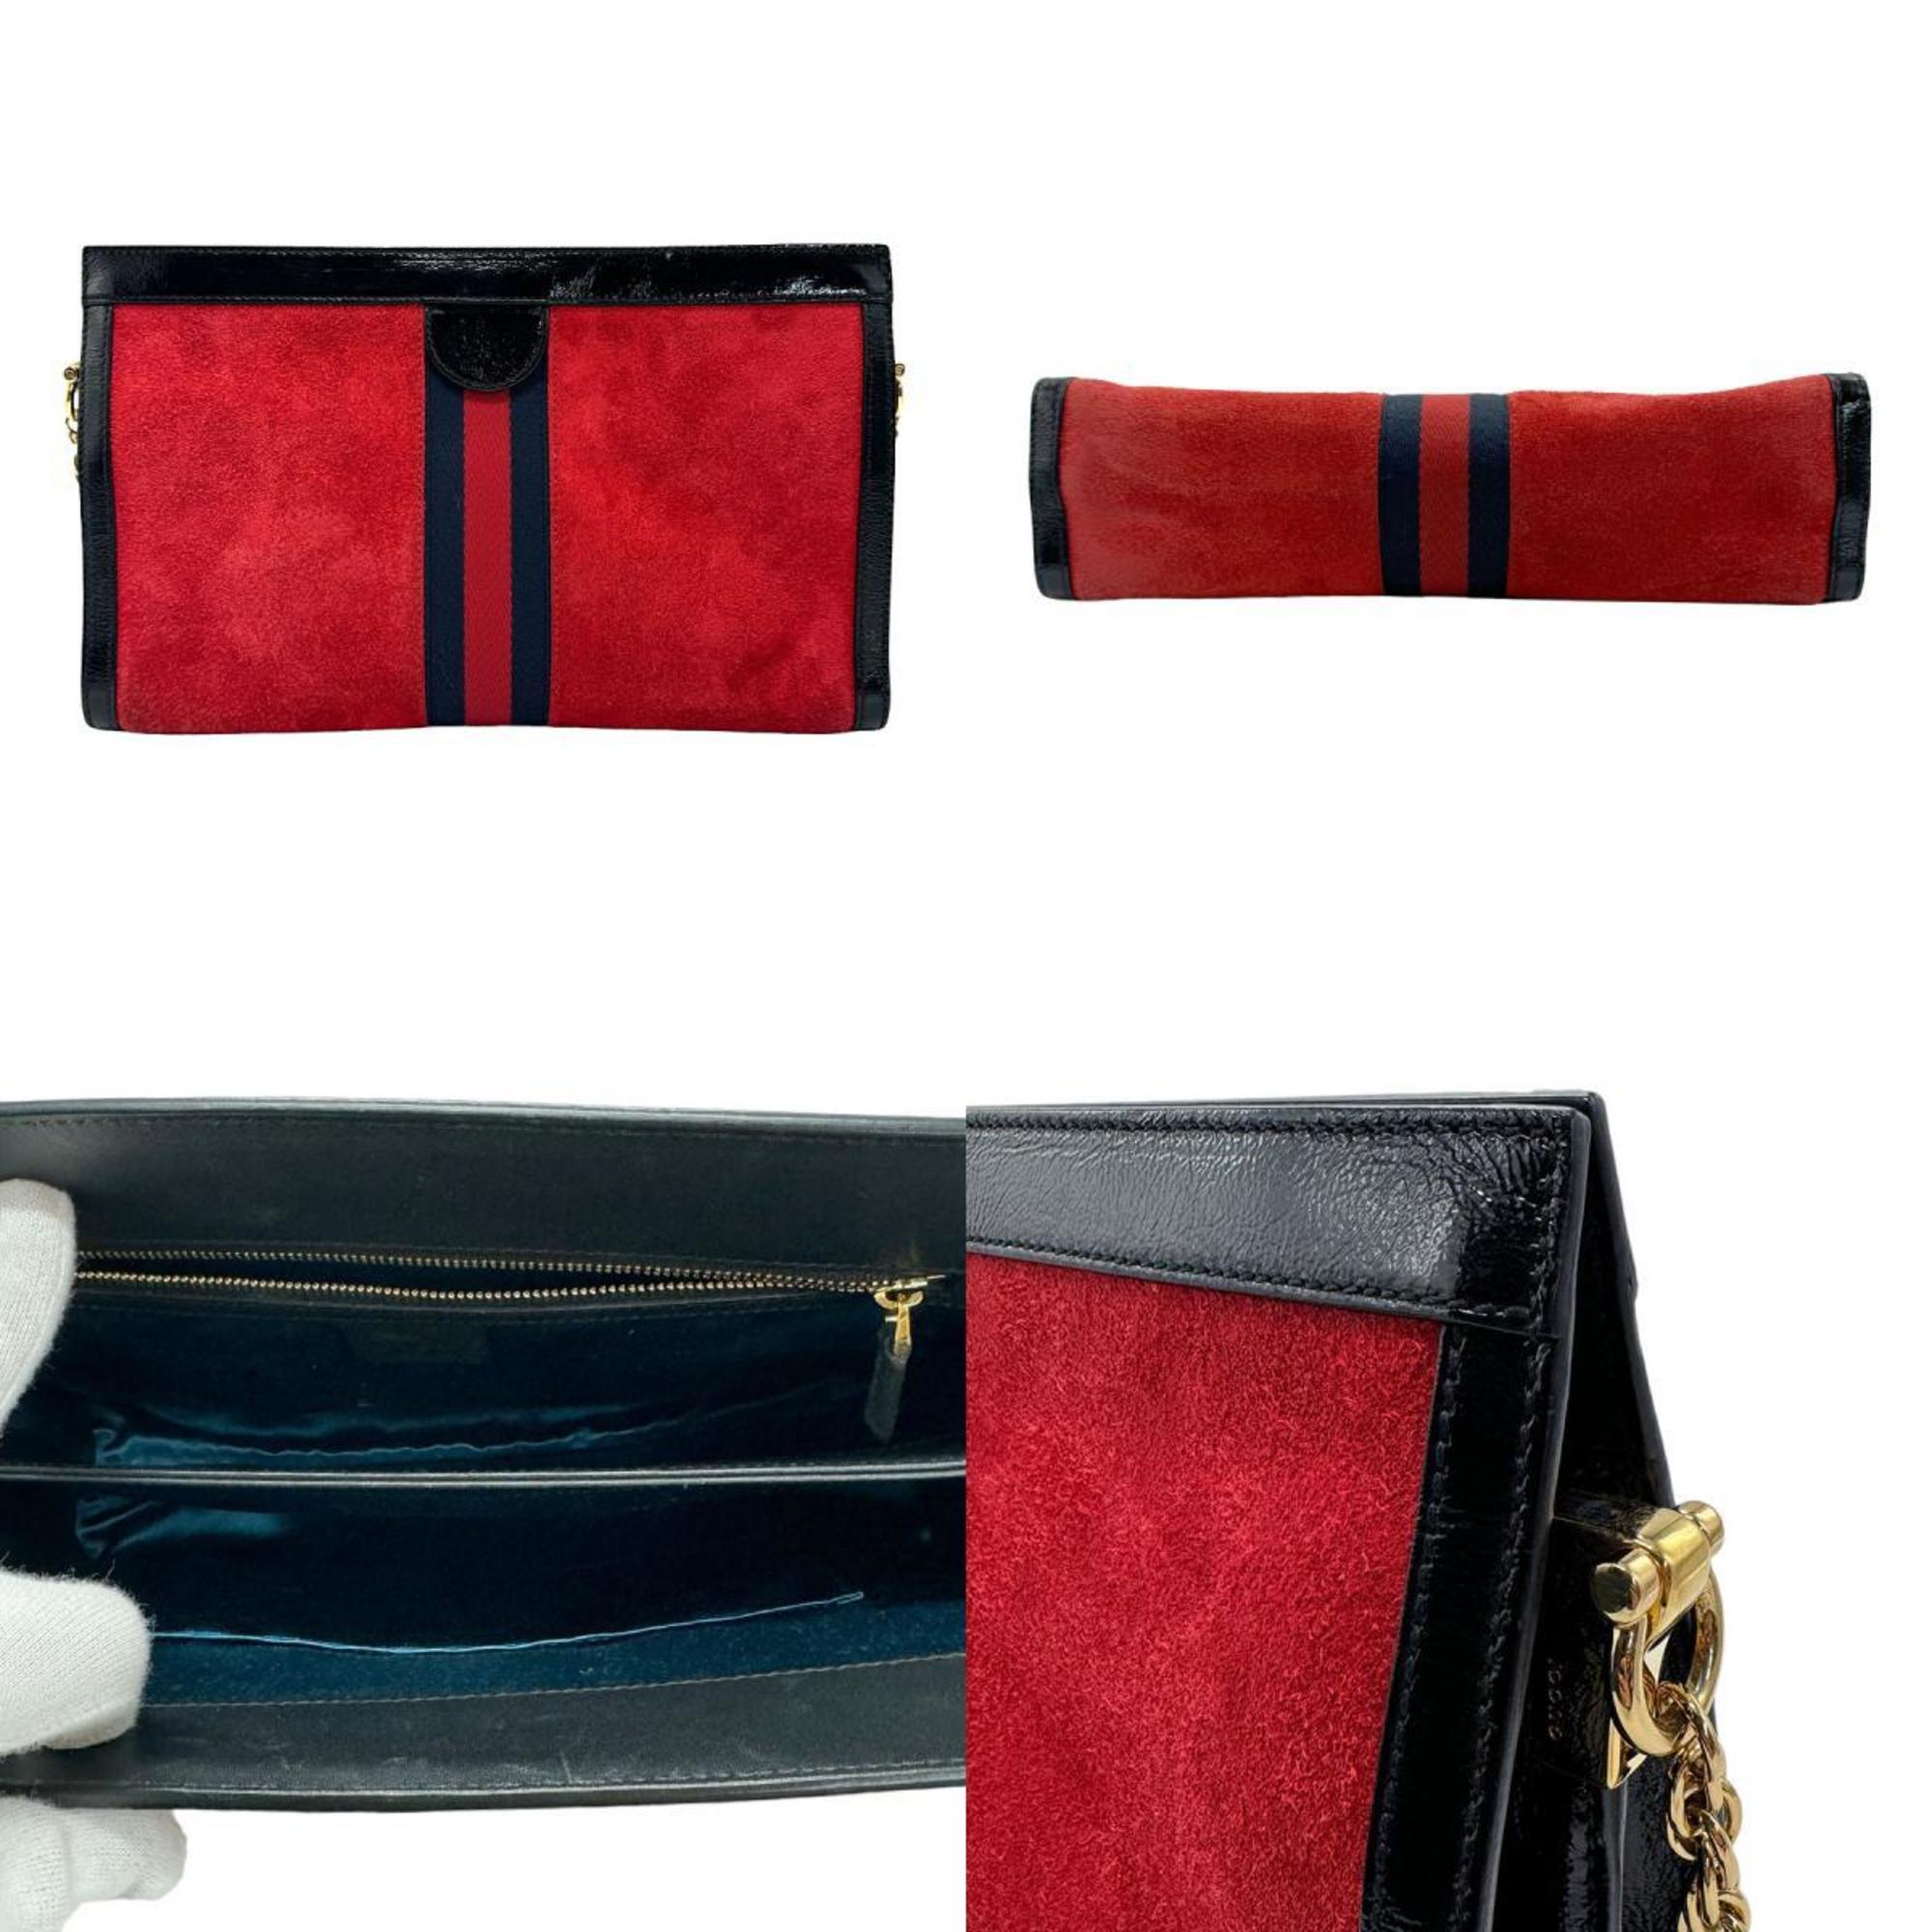 GUCCI Shoulder Bag Suede Leather Red Black Gold Women's 503876 z1179